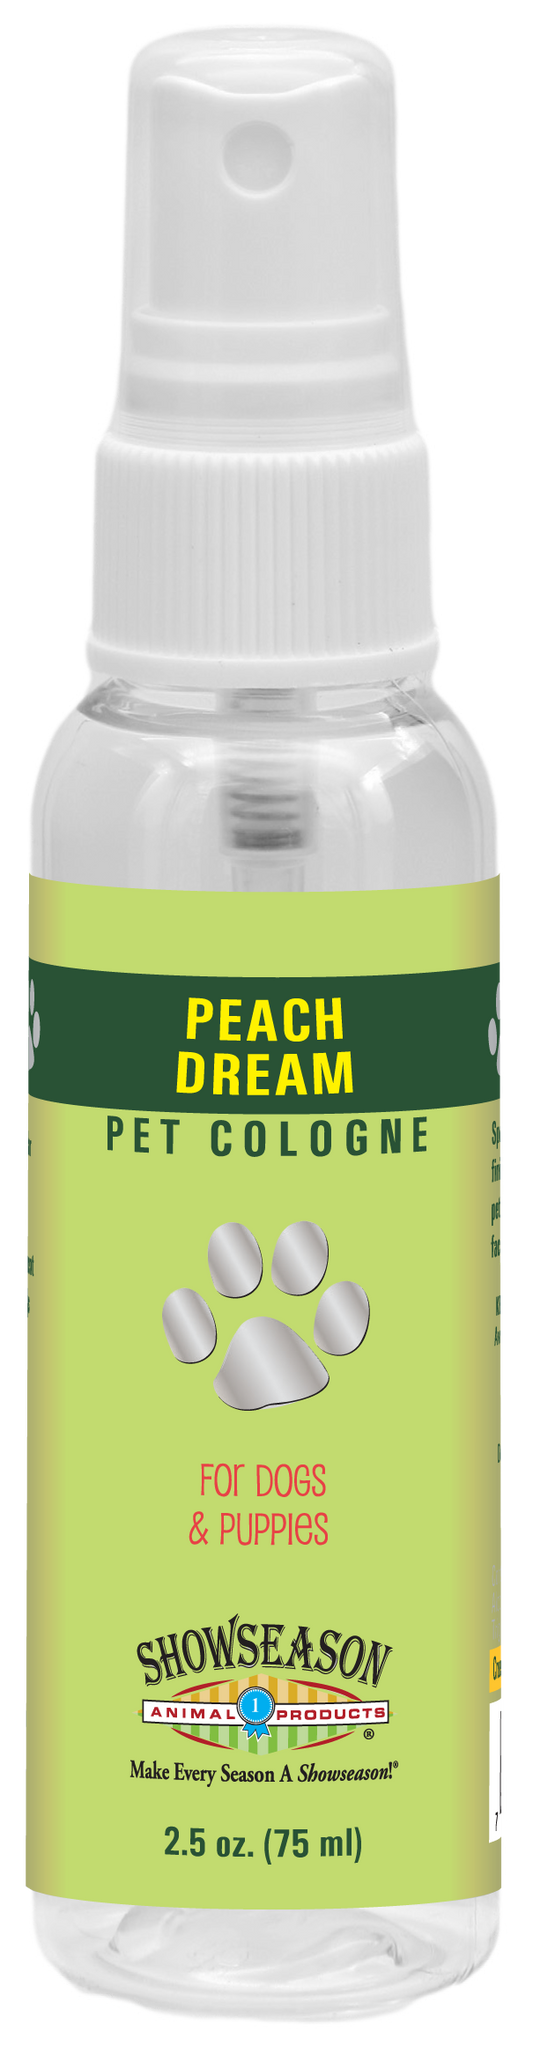 Peach Dream Pet Cologne | Showseason®